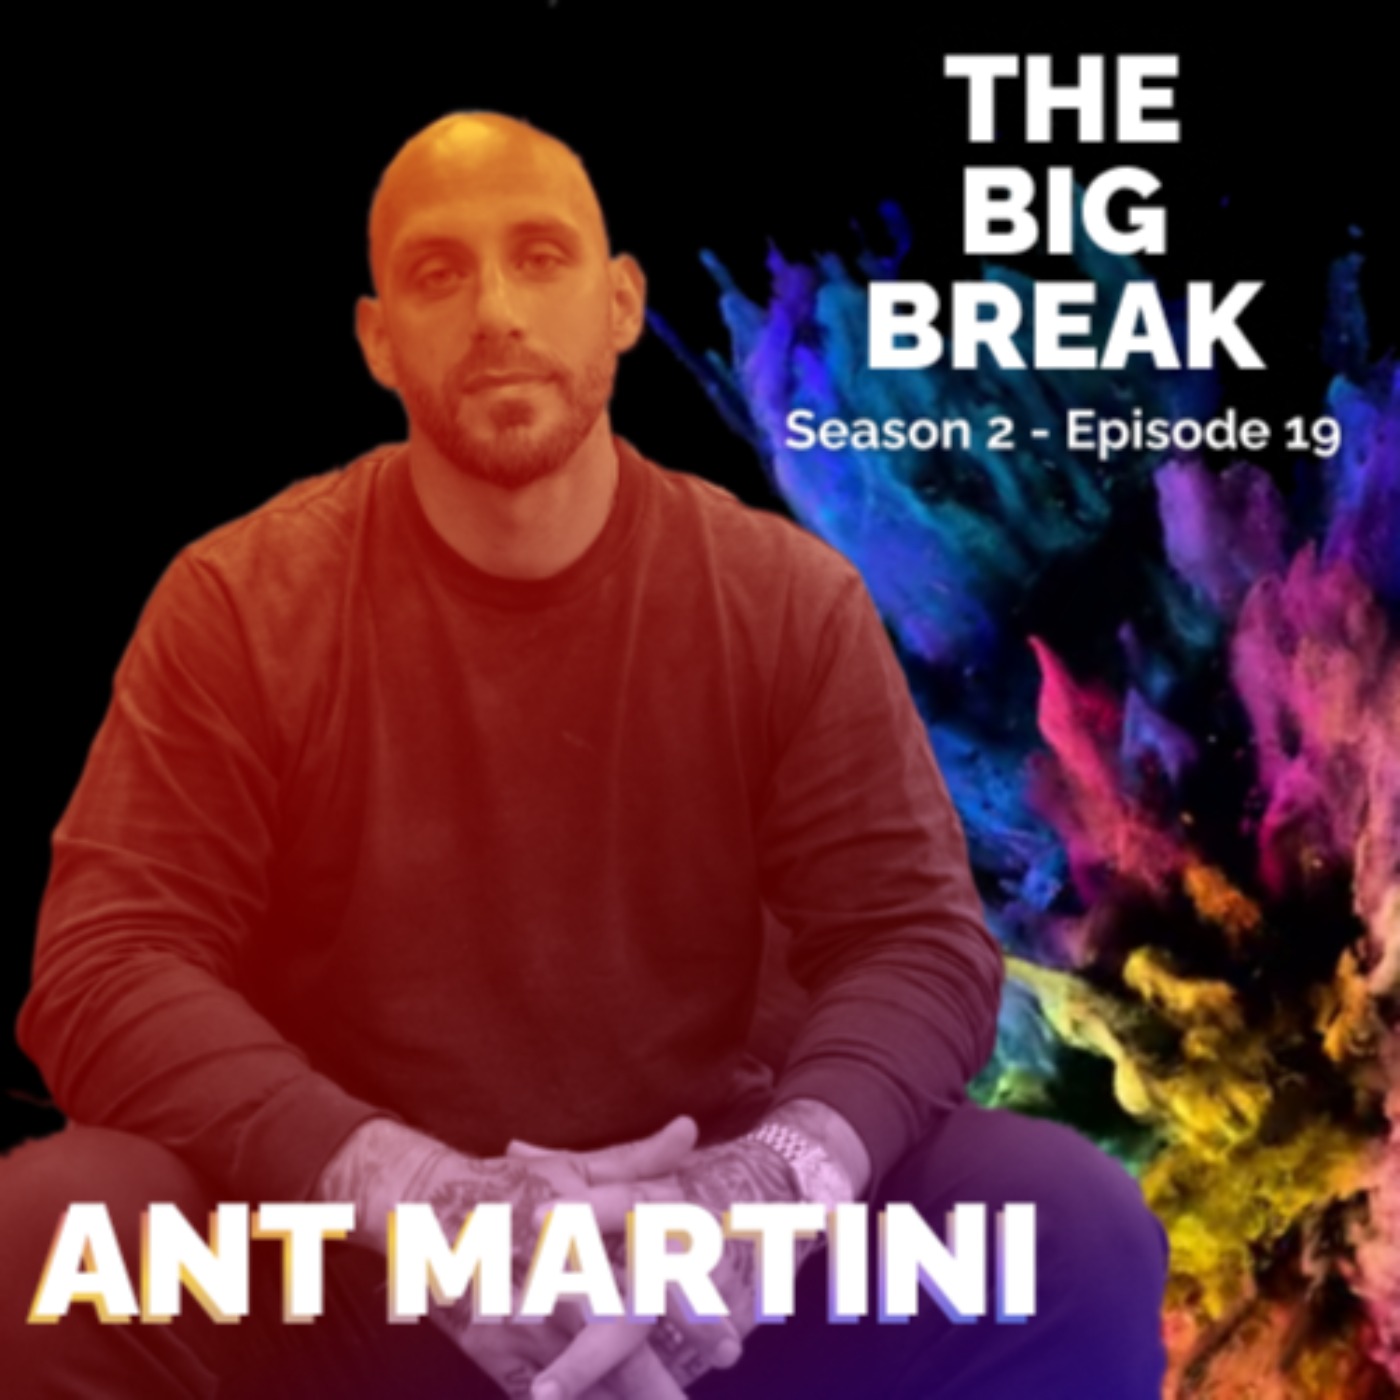 Ant Martini - Drive and hustle